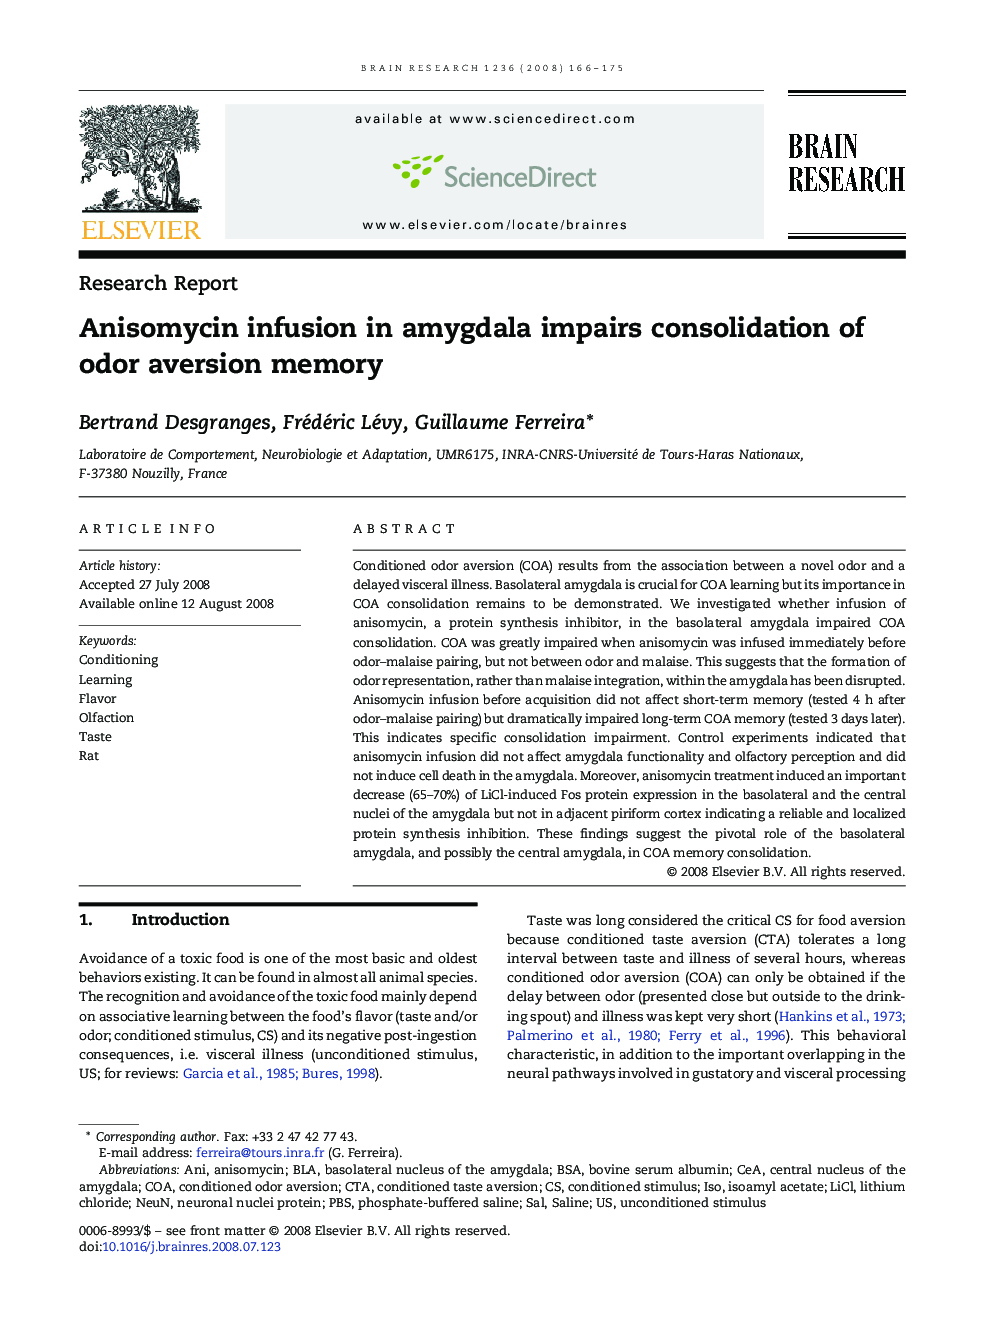 Anisomycin infusion in amygdala impairs consolidation of odor aversion memory